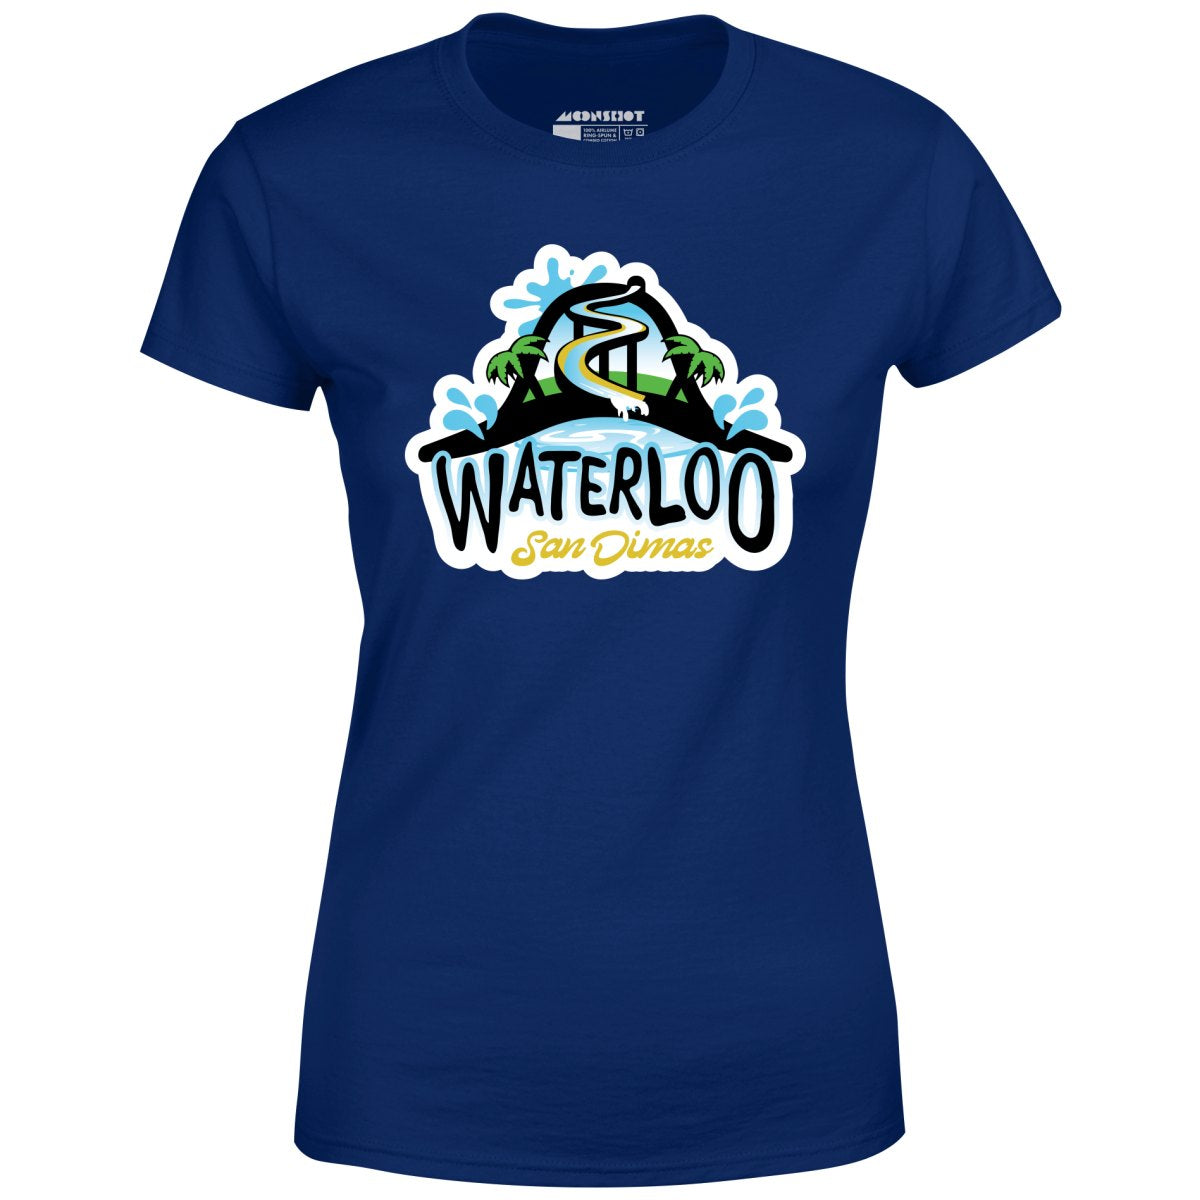 Bill & Ted - Waterloo Water Park San Dimas - Women's T-Shirt